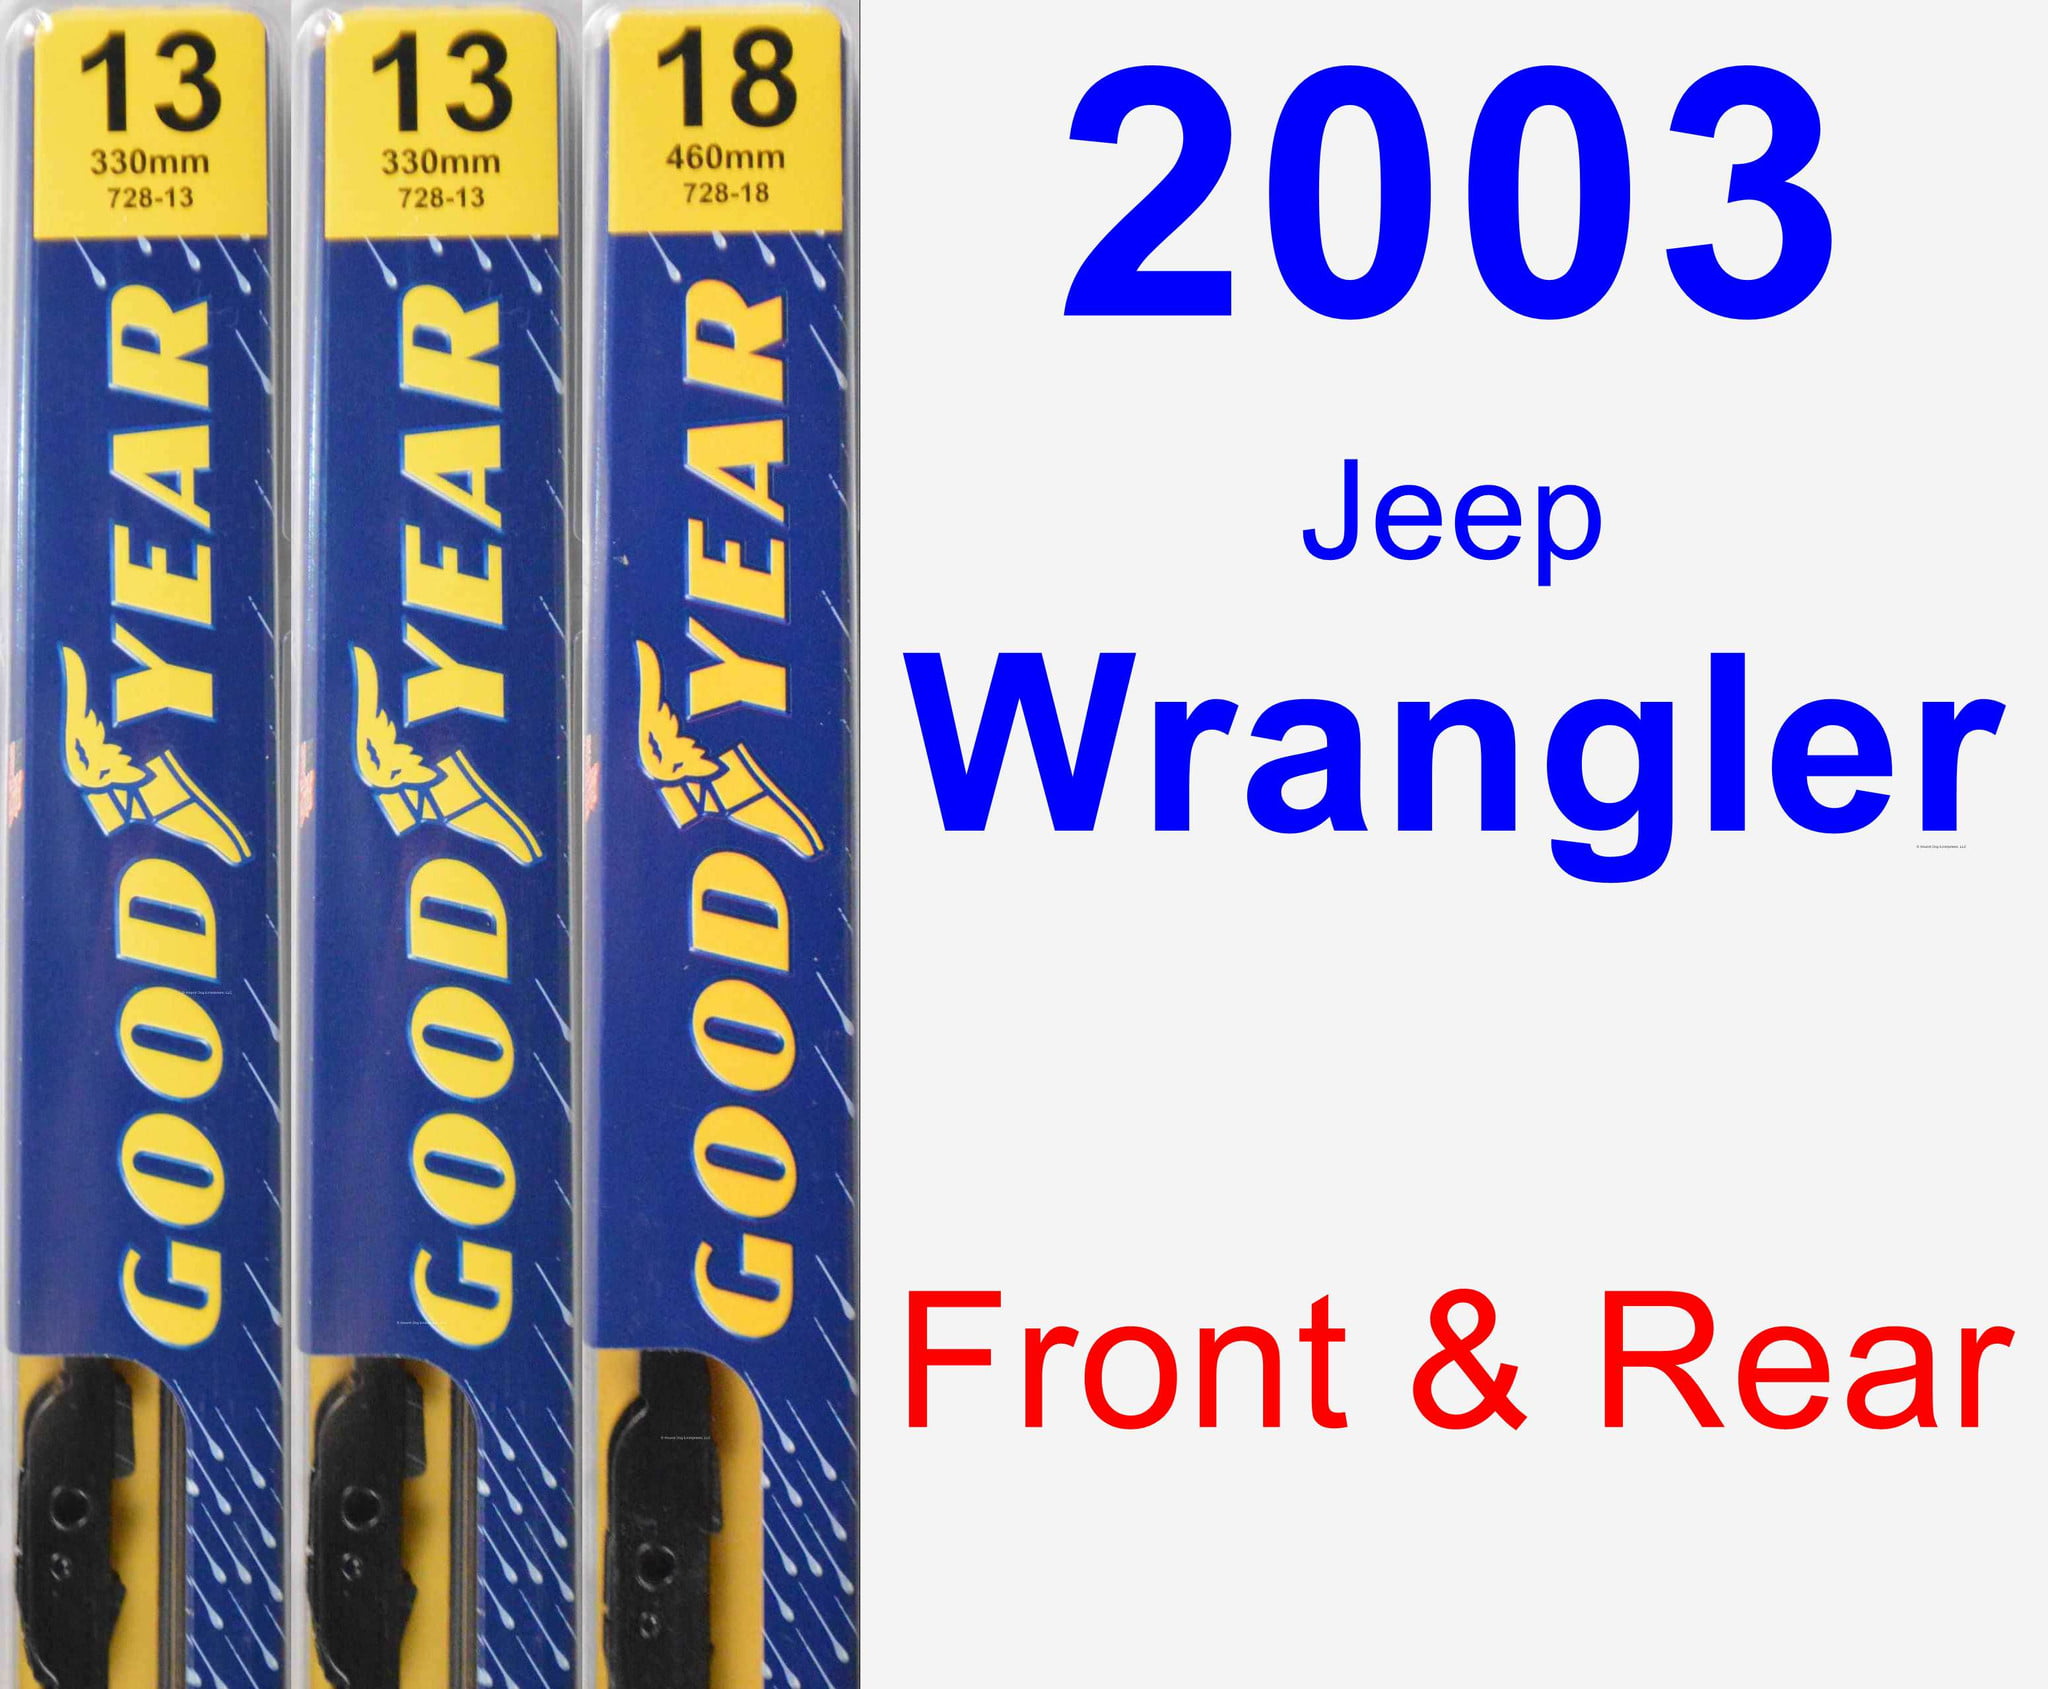 2003 Jeep Wrangler Wiper Blade Set/Kit (Front & Rear) (3 Blades) -  Premium 